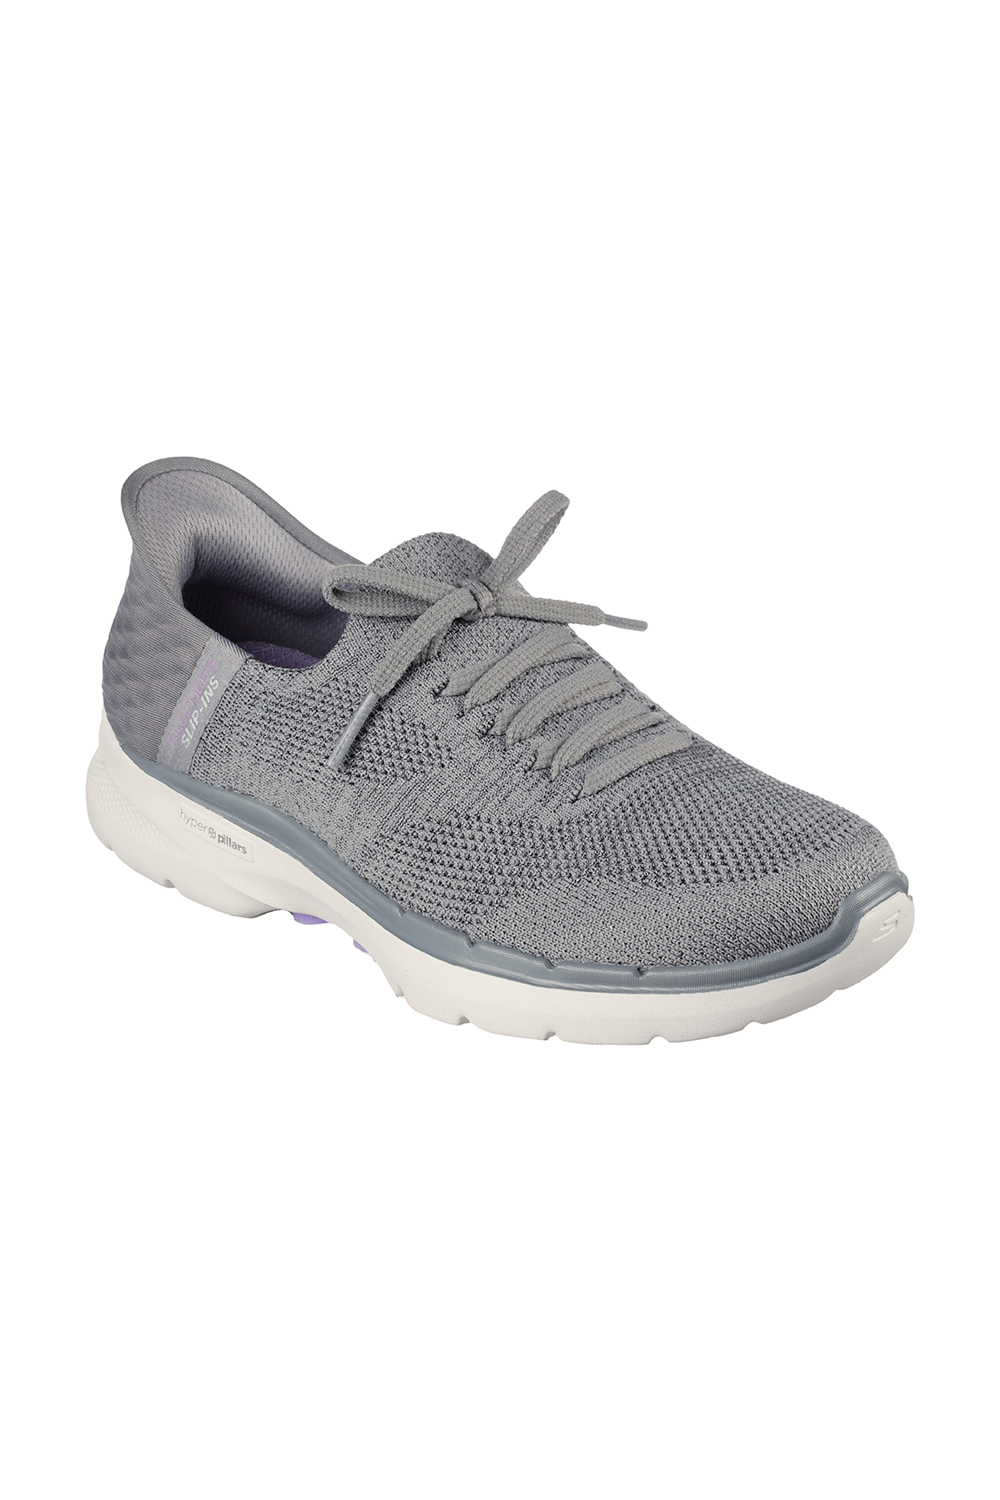 Skechers -124568-Gylv-Go Walk 6-Women-Running-Shoe | Odel.lk